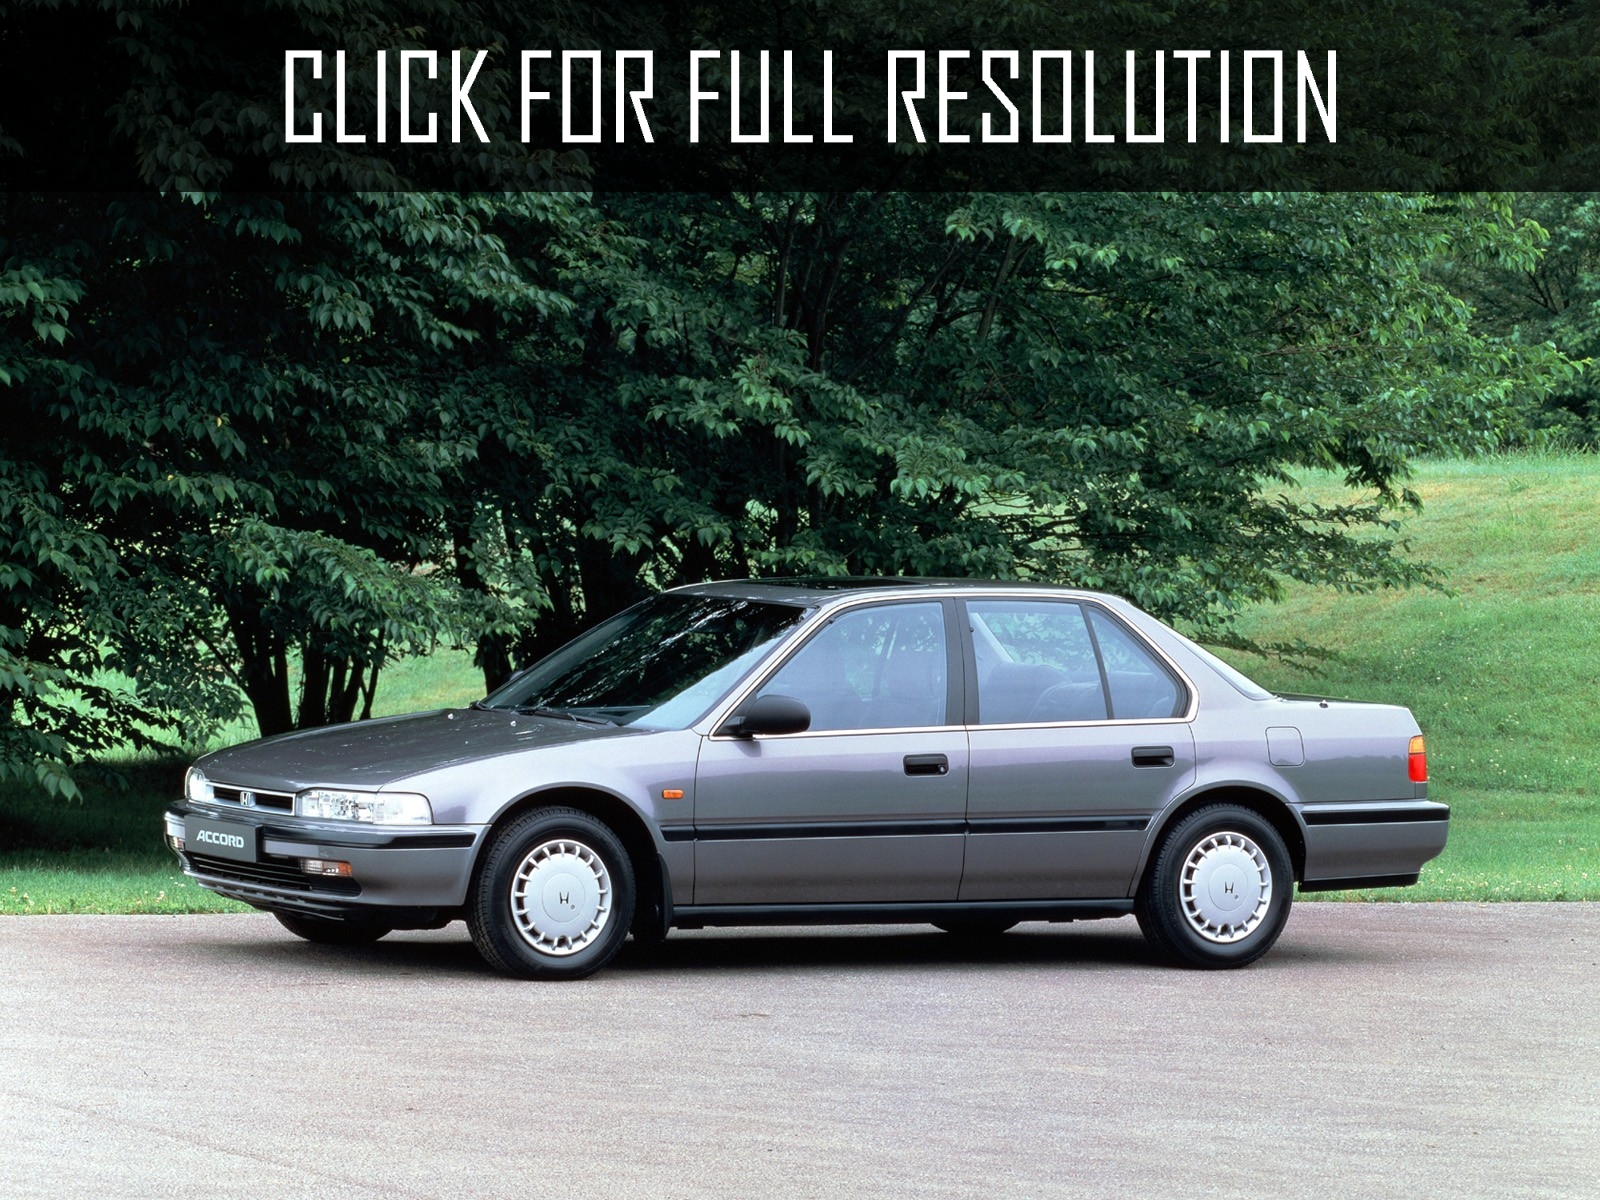 1990 Honda Accord